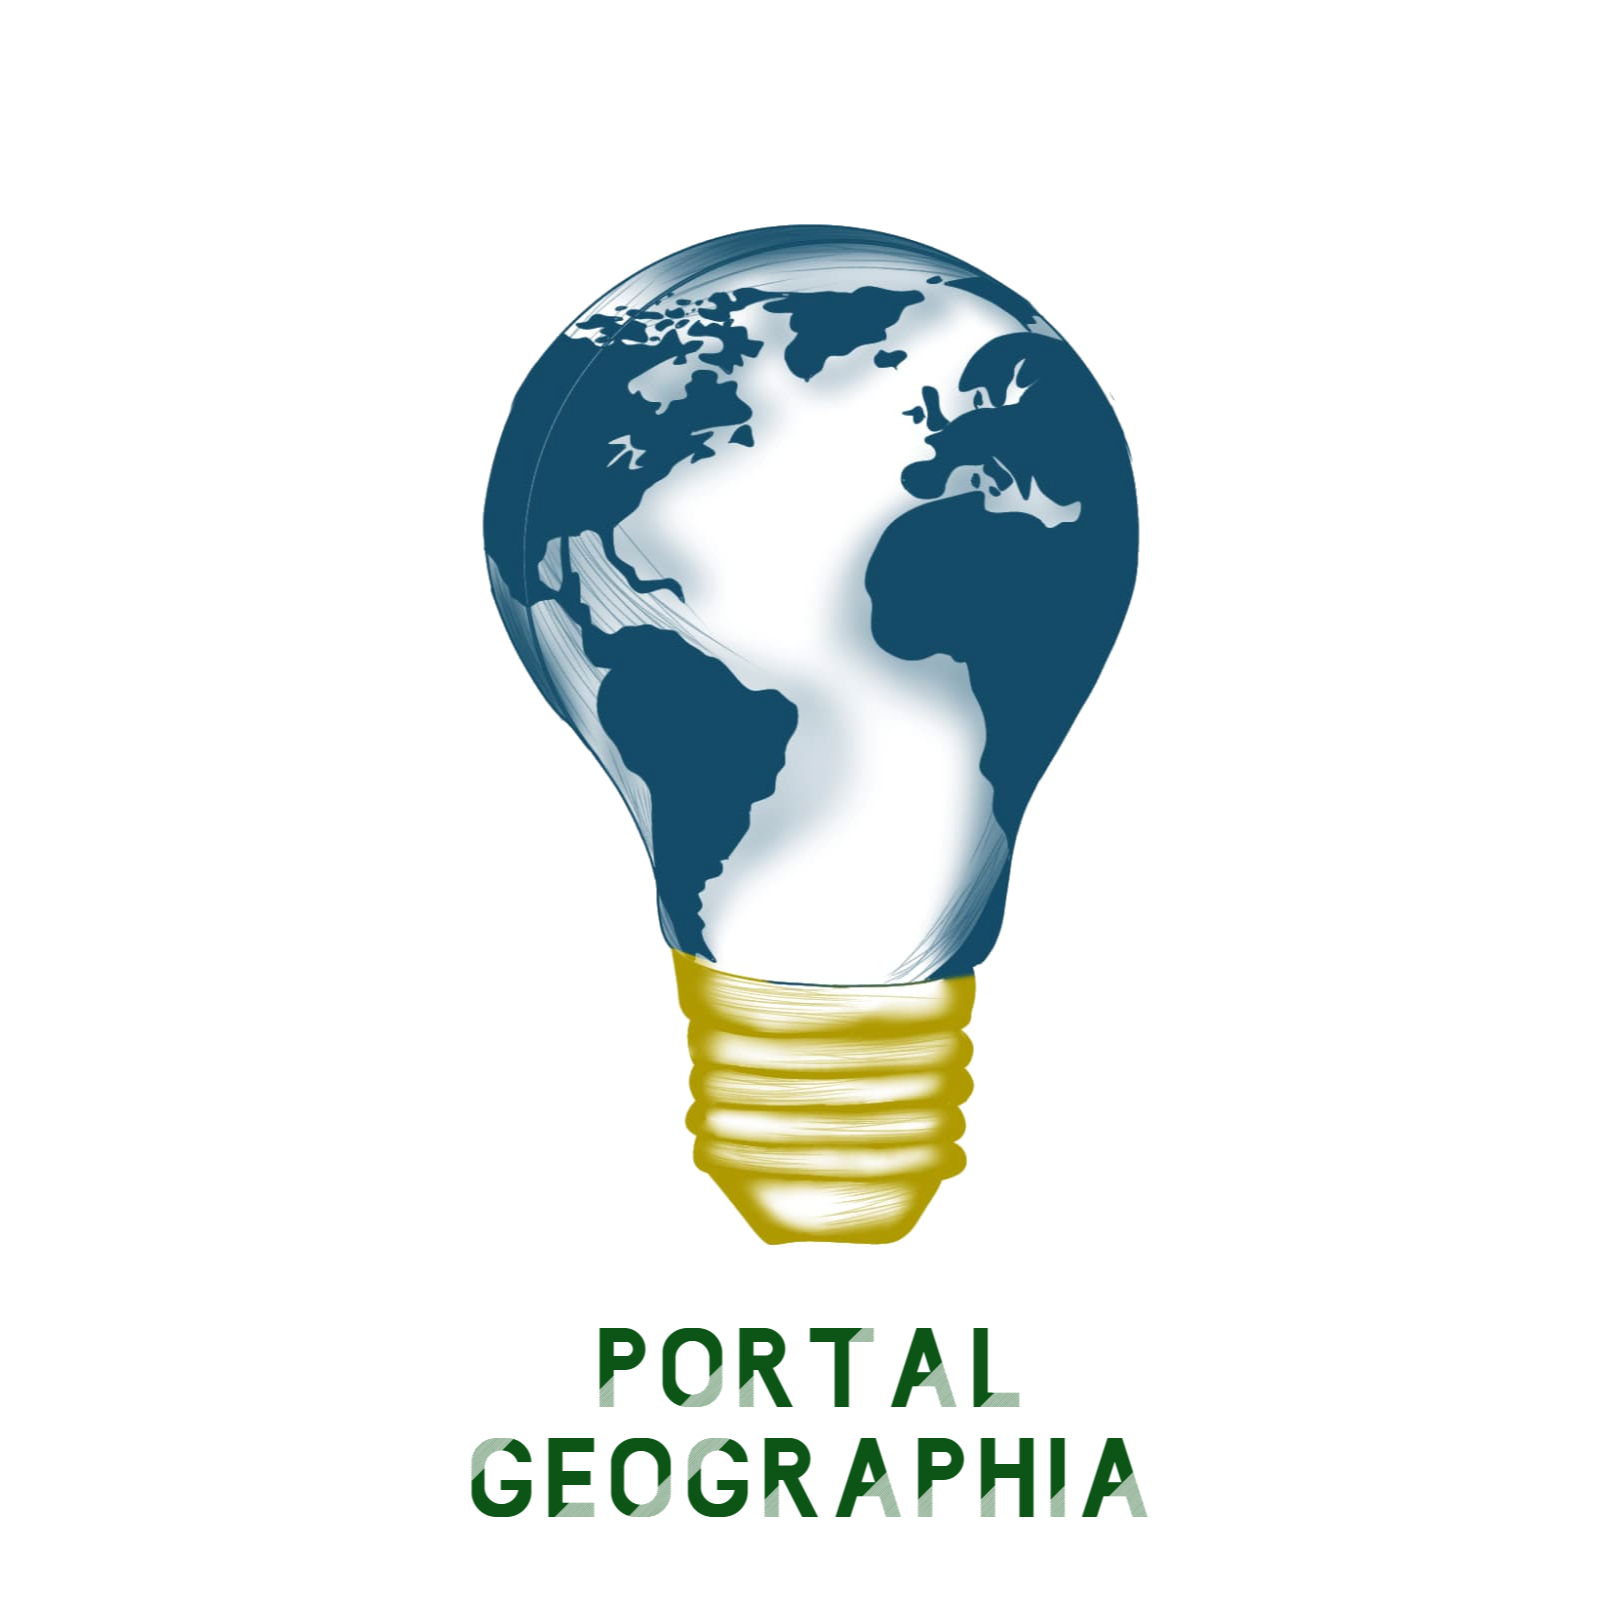 Portal Geographia